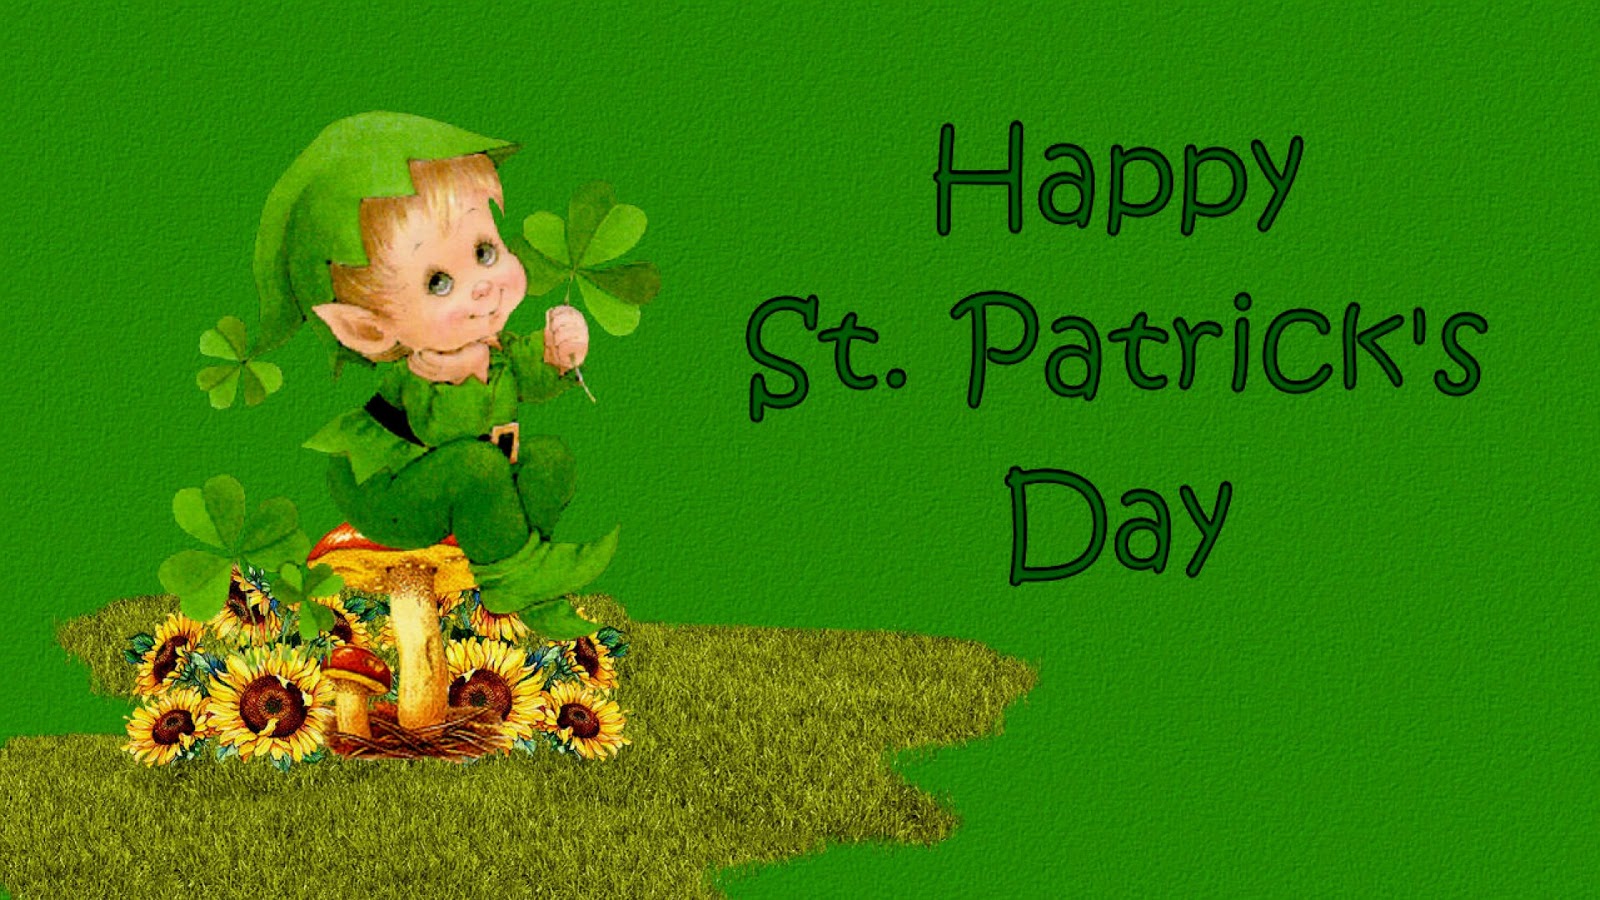 st patrick's day Leprechaun Wallpaper and Background Imagex900